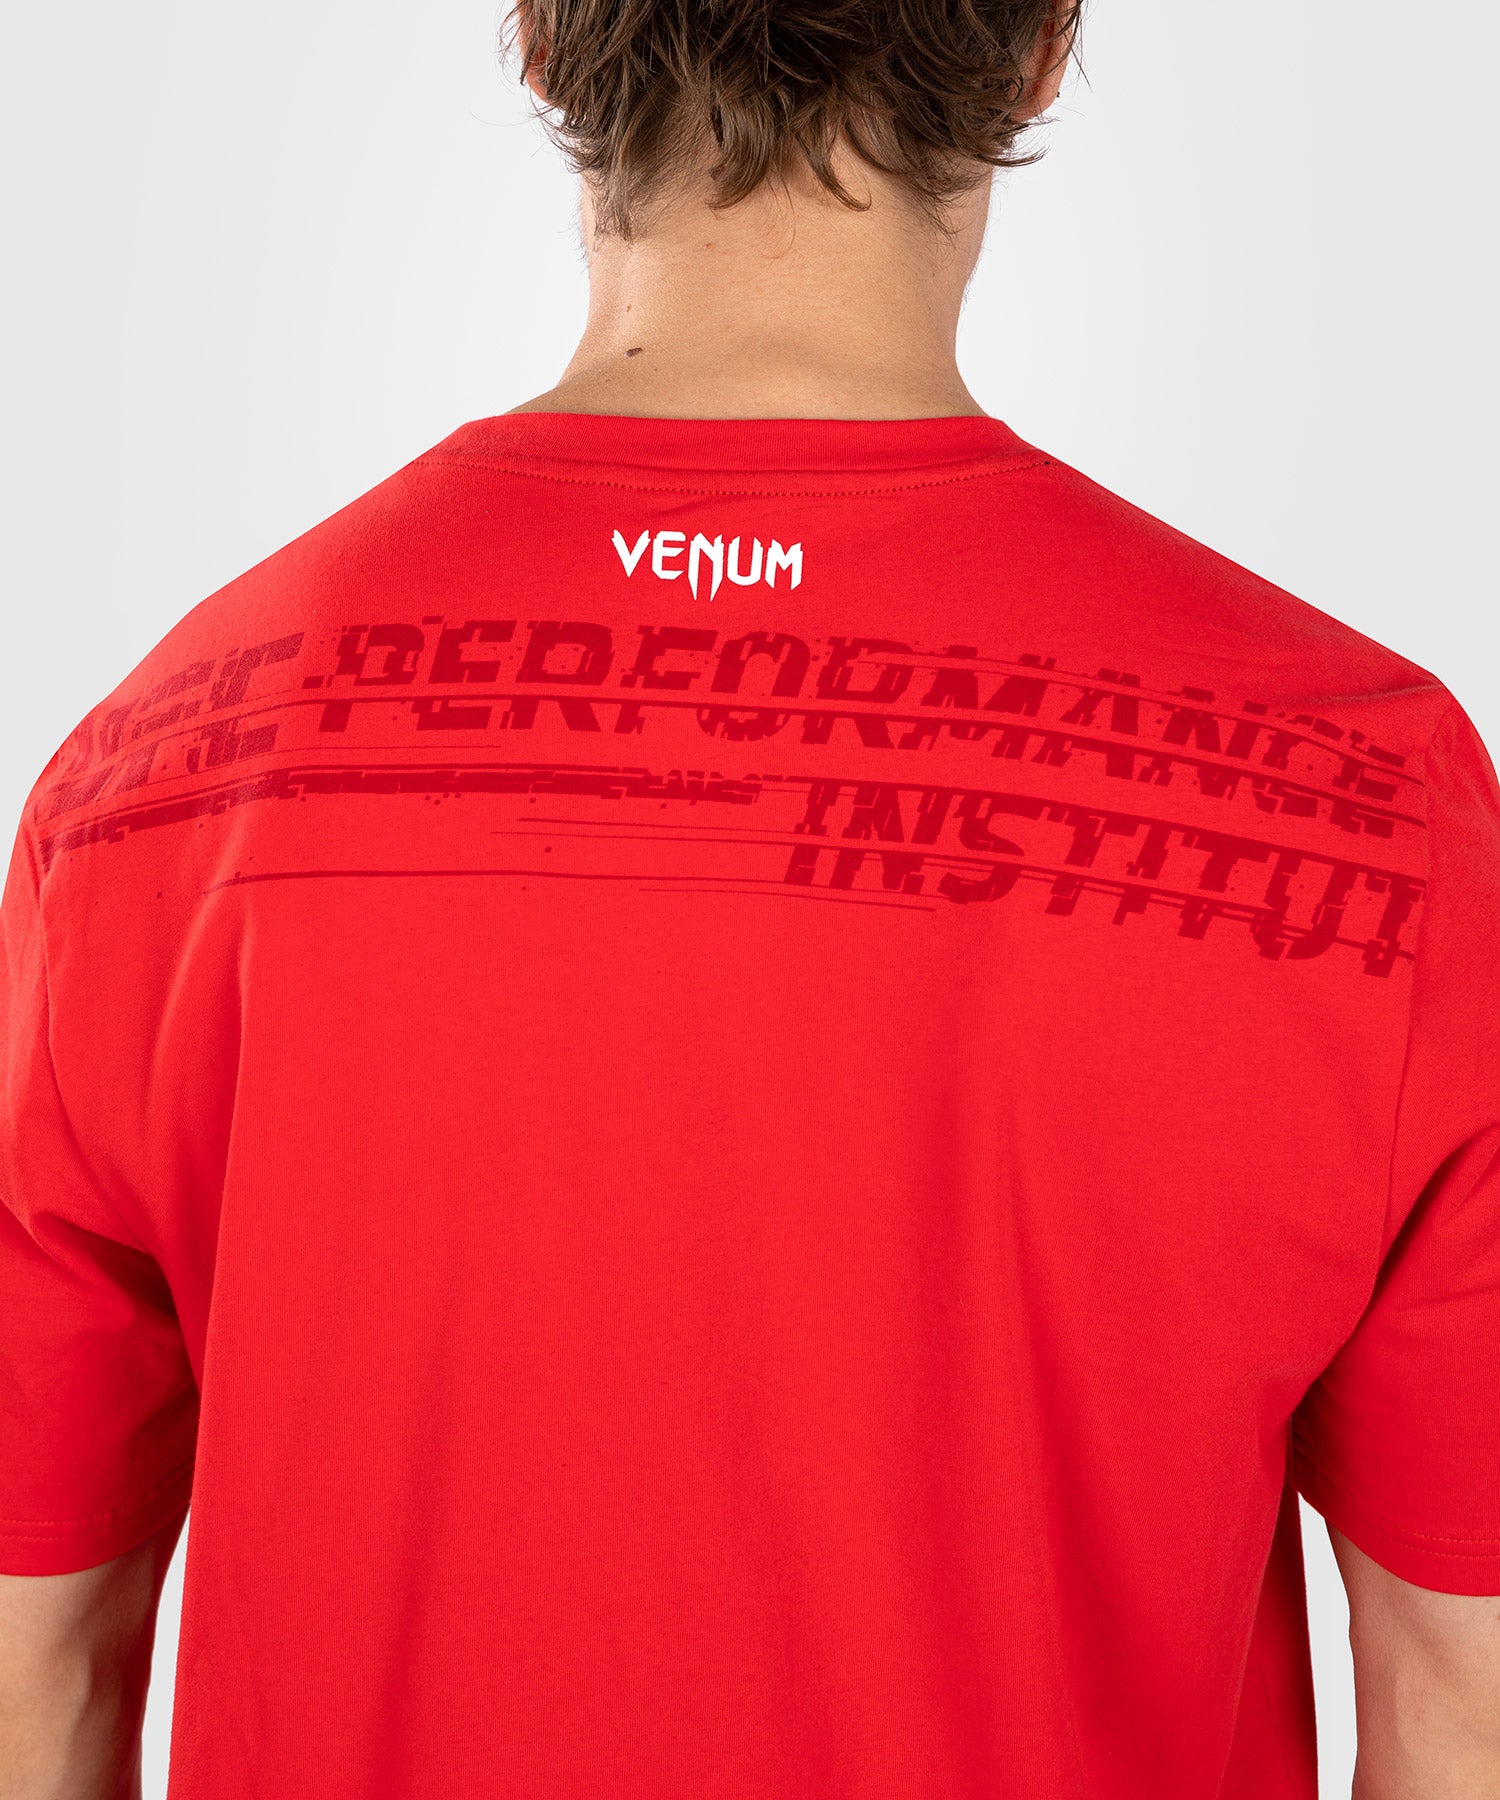 T-Shirt Homme UFC Venum Performance Institute 2.0 -Rouge - T-shirts